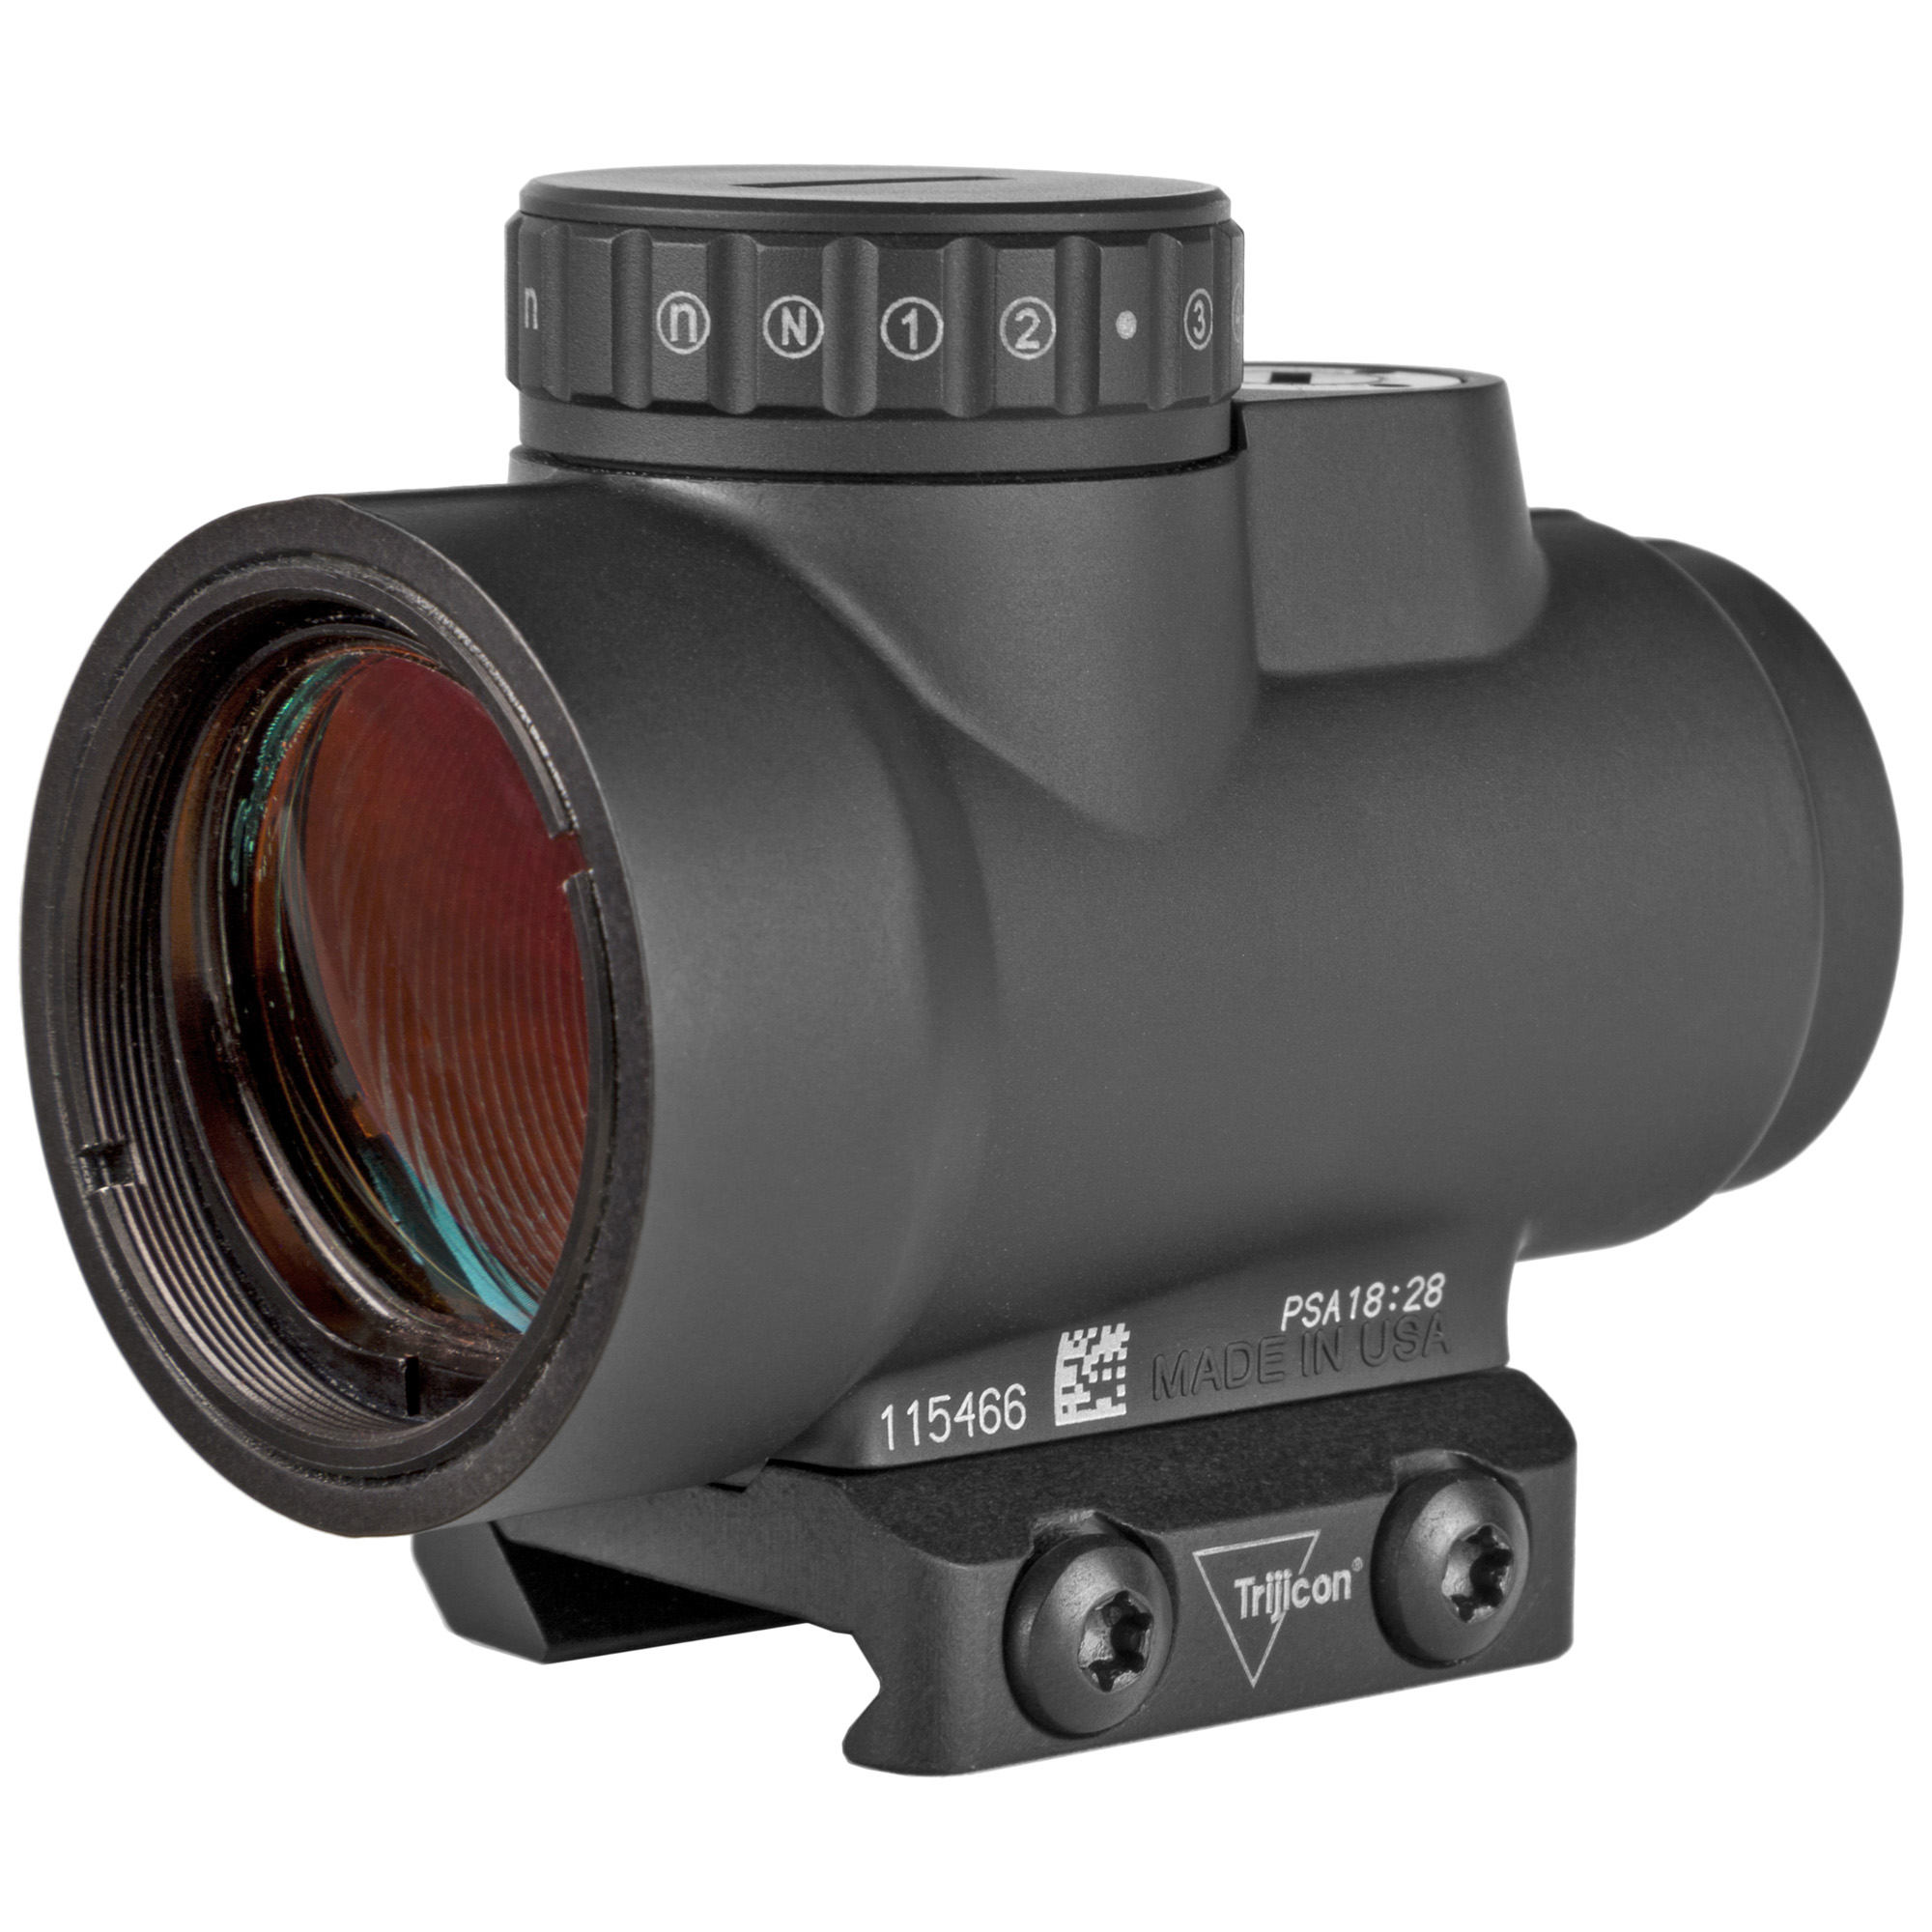 Trijicon MRO HD 1x25mm Red Dot Sights, 68 MOA Reticle w/ 2.0 MOA Dot, Low Mount AC32067, Black, MRO-C-2200051, UPC: 719307616011